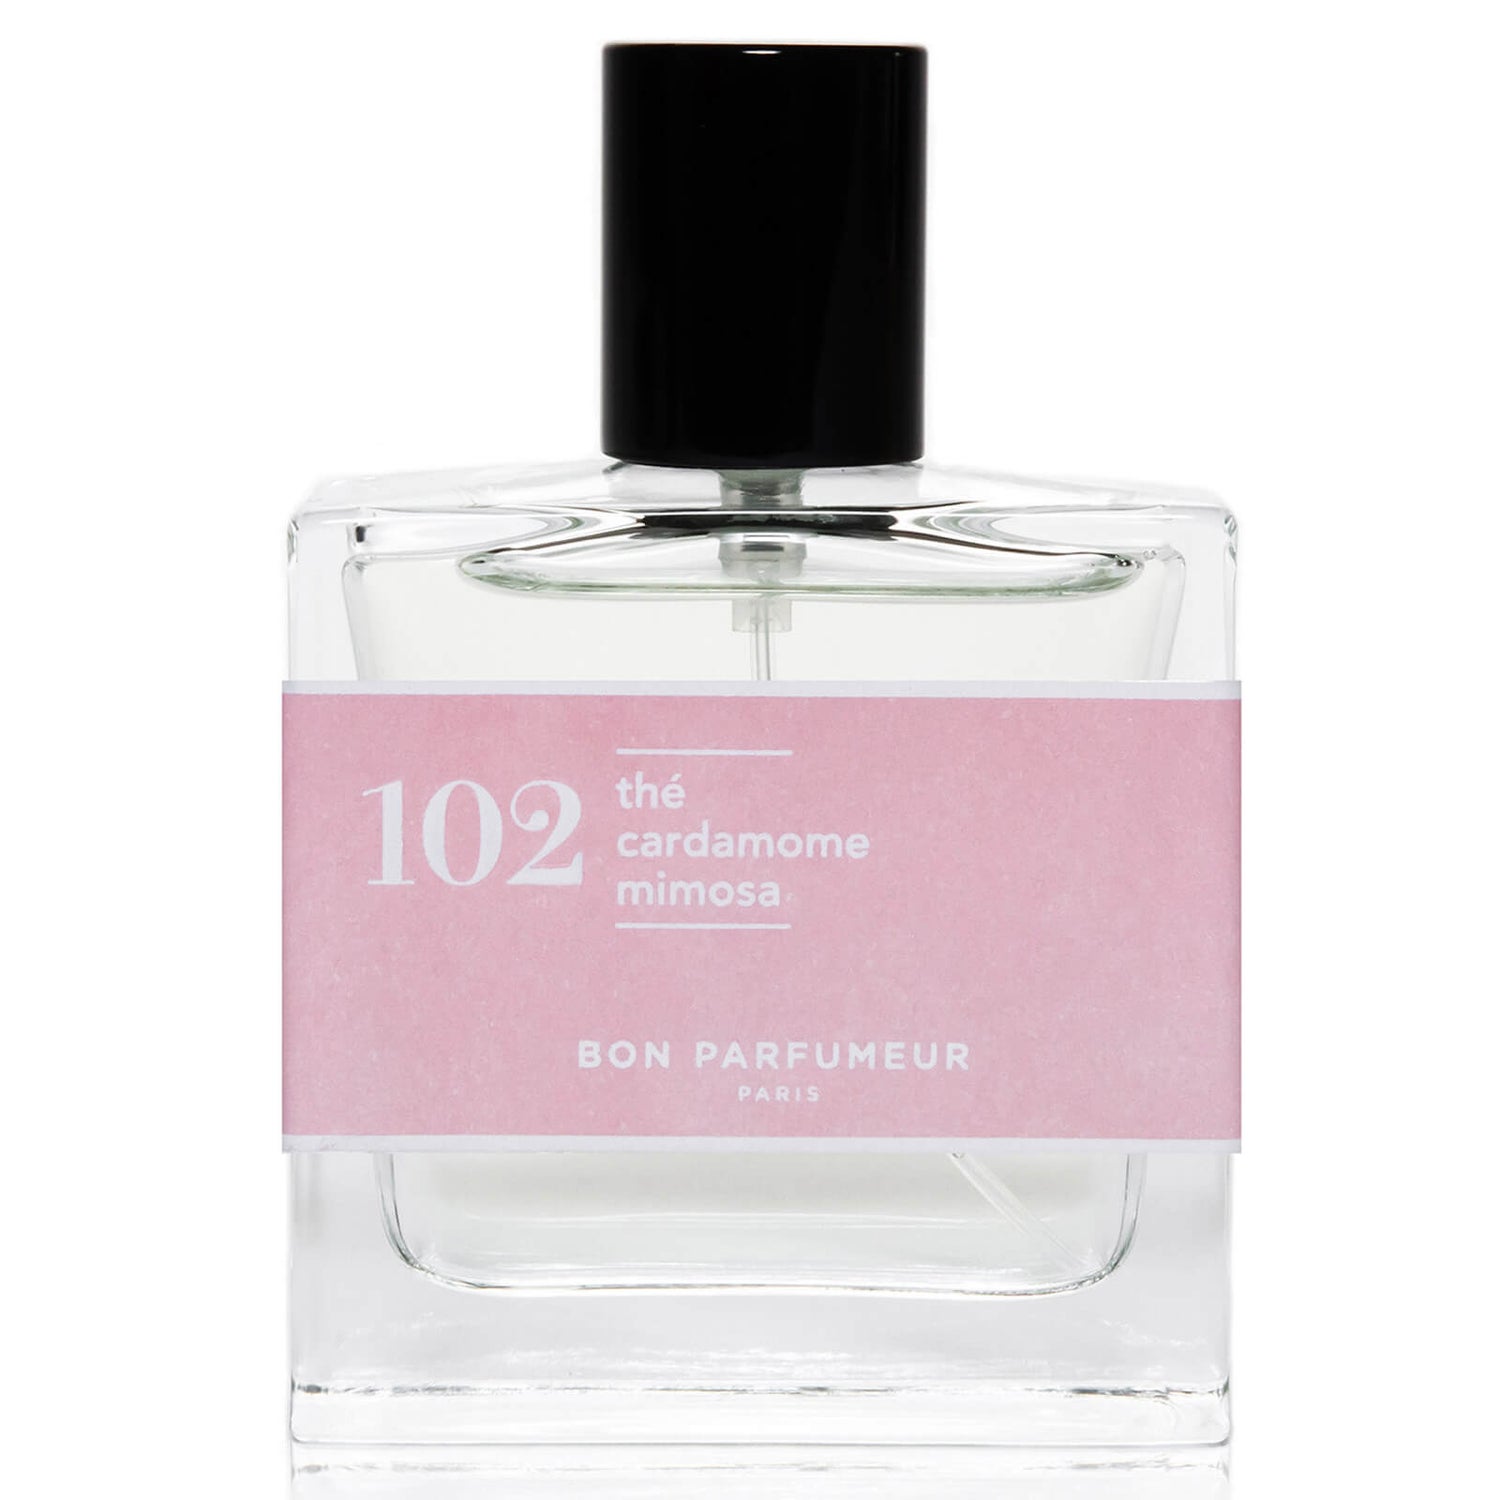 Bon Parfumeur 102 Tea Cardamom Mimosa Eau de Parfum (Various Sizes)